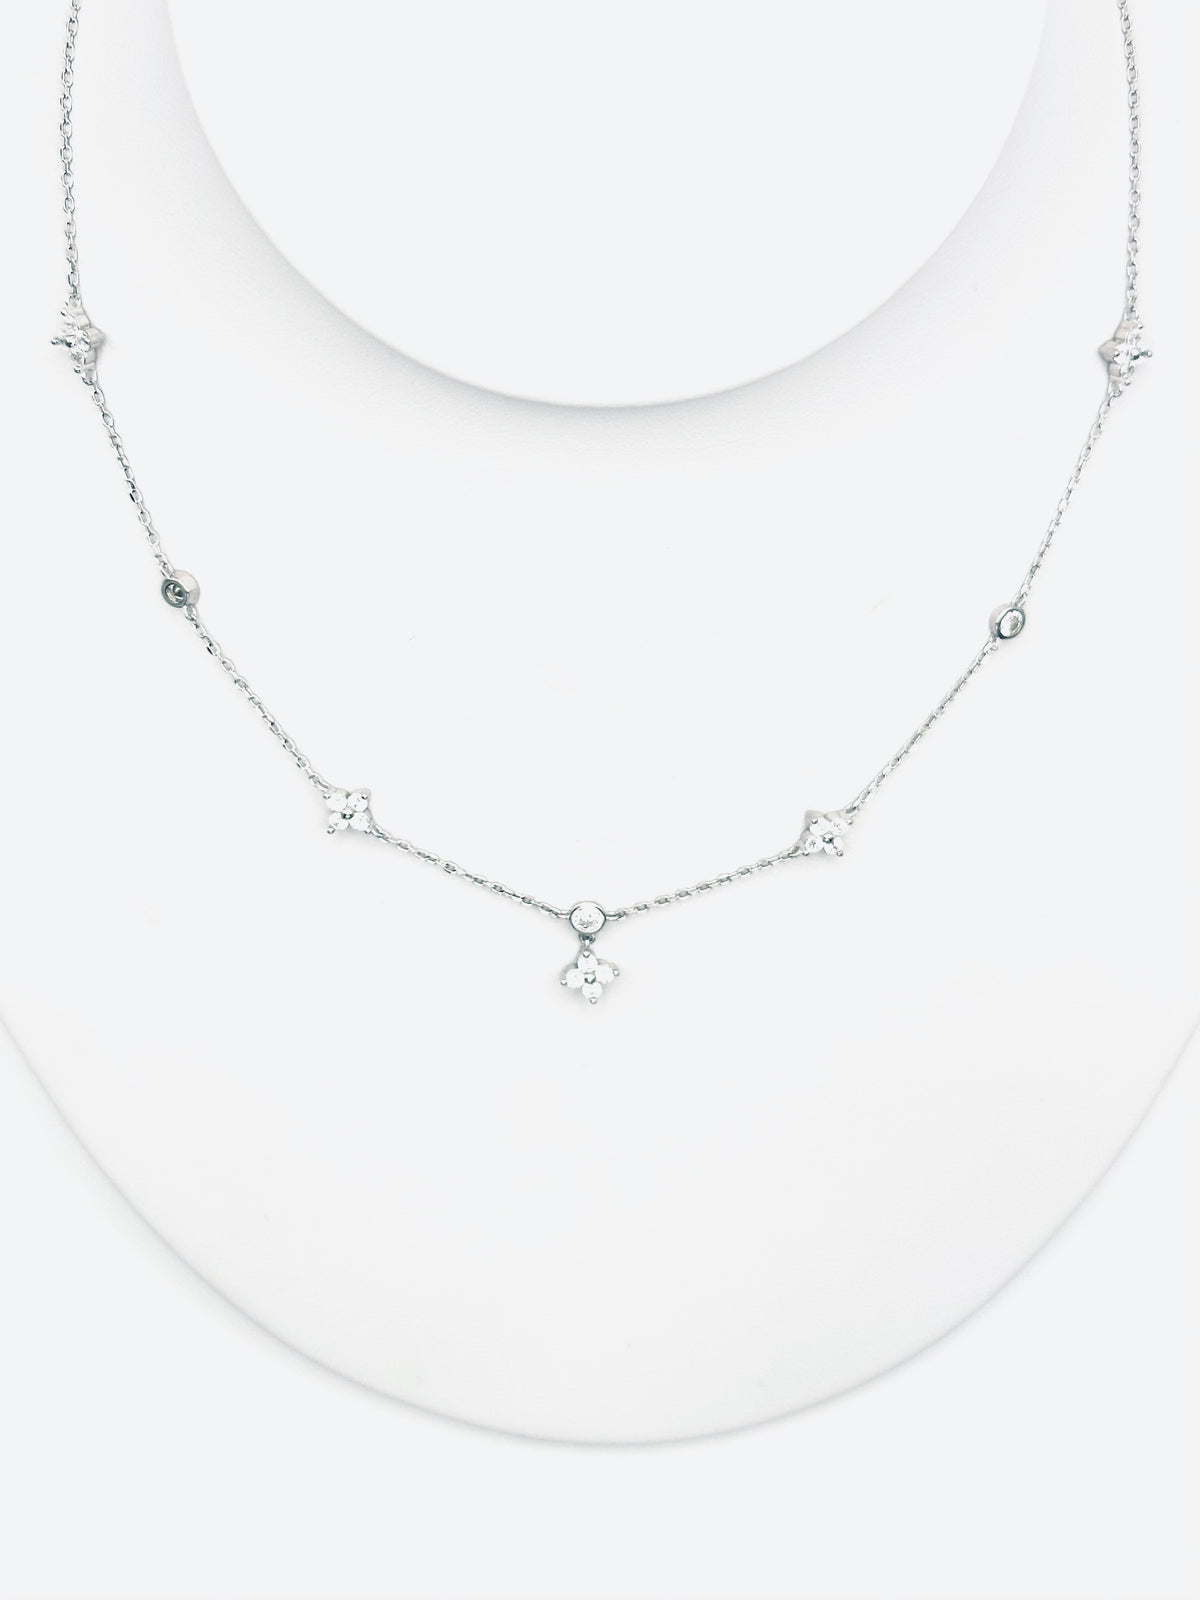 Clove Luxe Adornment Pendant Necklace